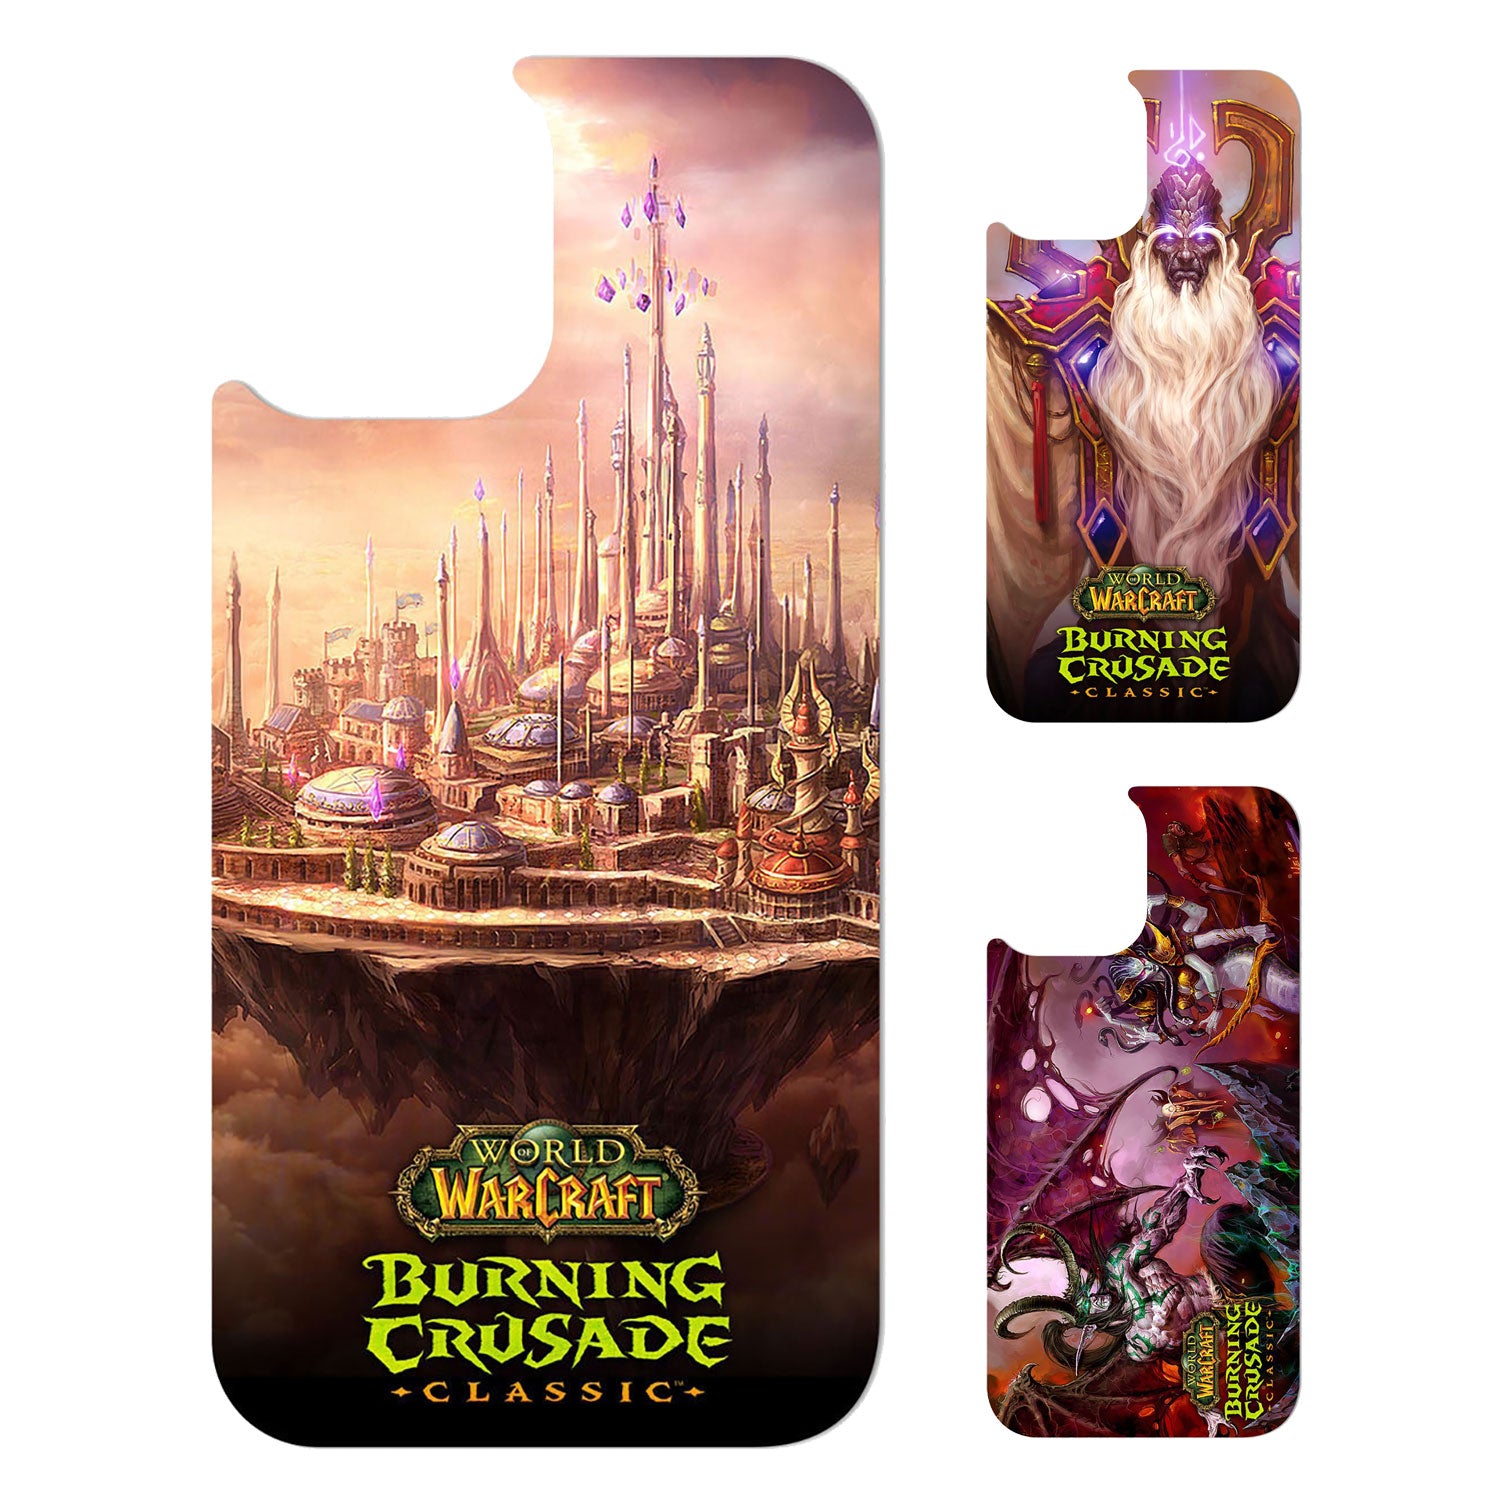 World of Warcraft Burning Crusade Classic InfiniteSwap Phone Cover Pack - Main Image